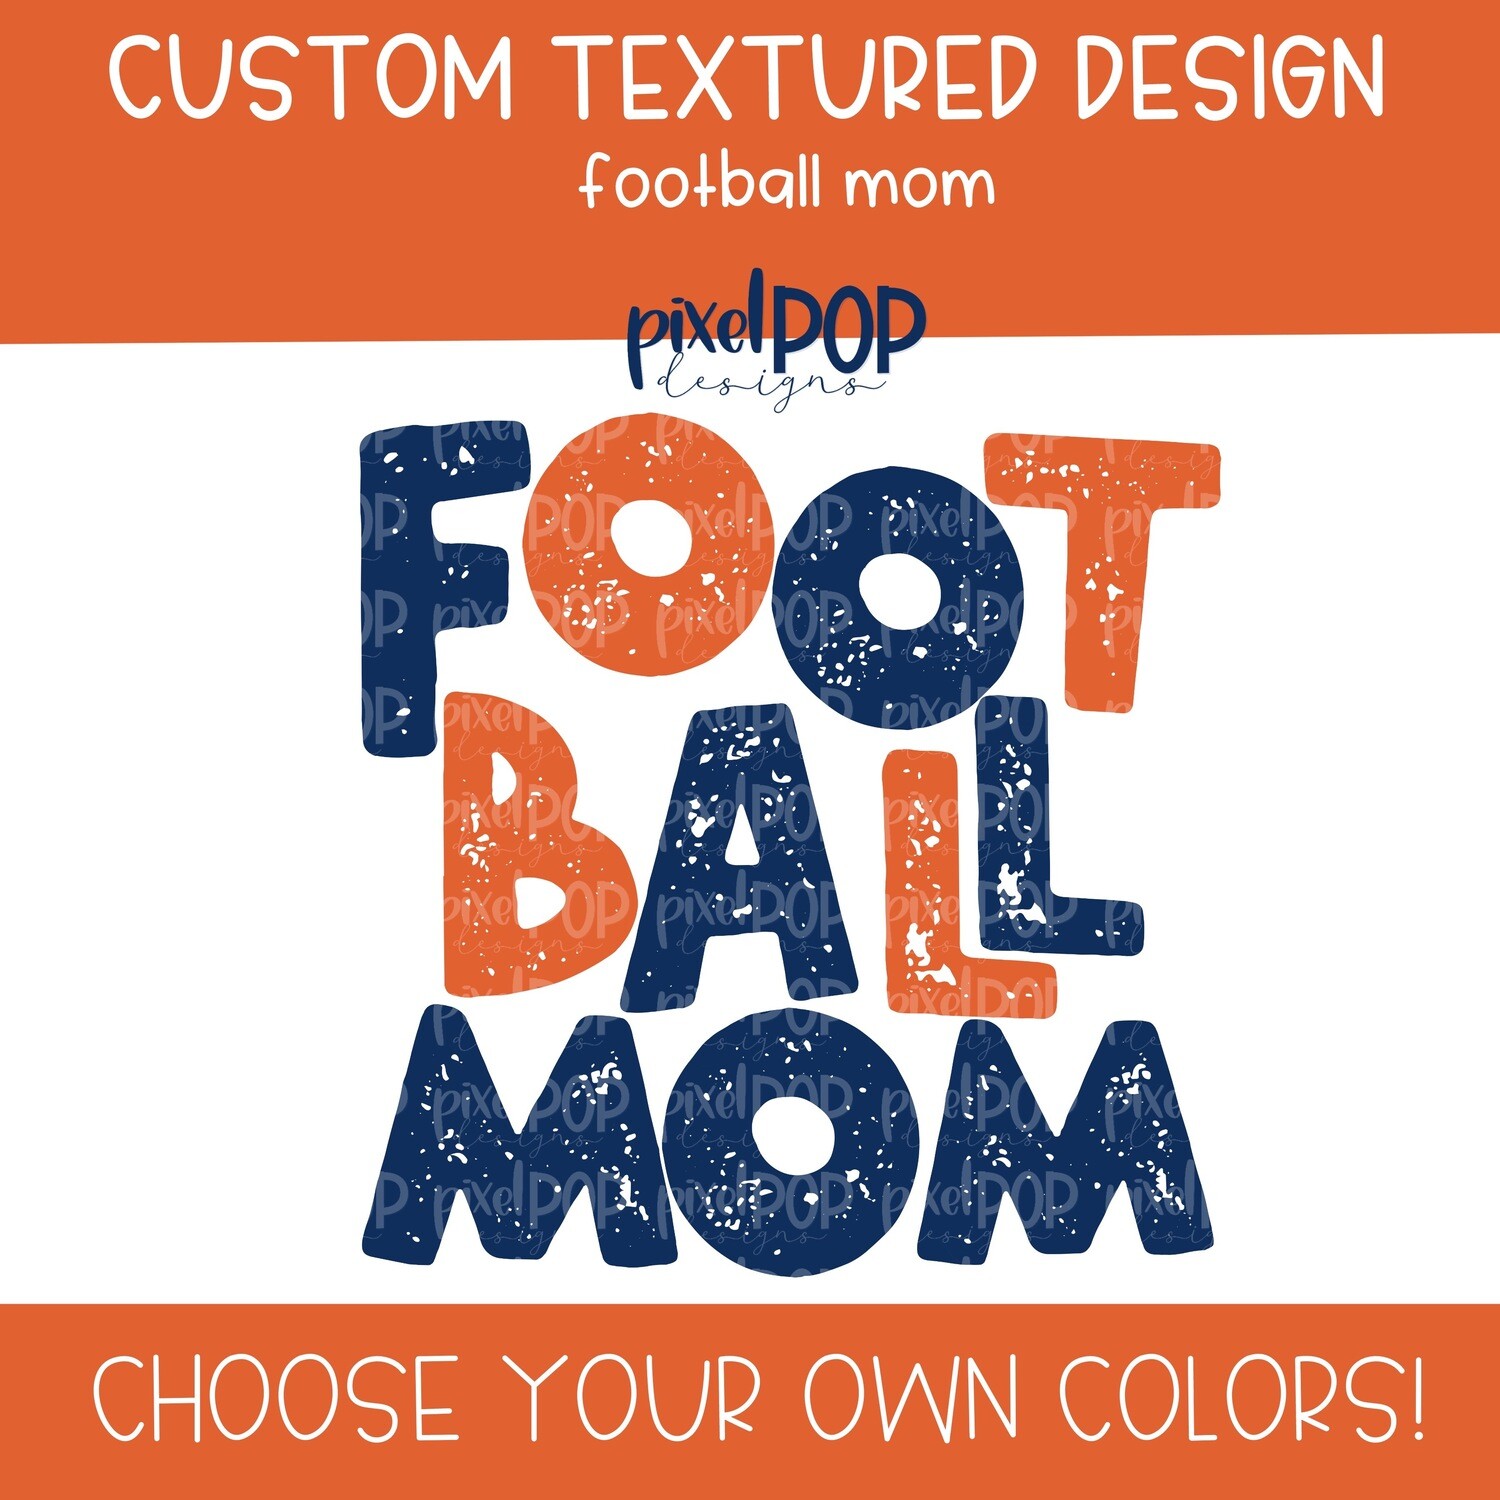 Custom Textured Football Mom Design + Your Choice of Colors